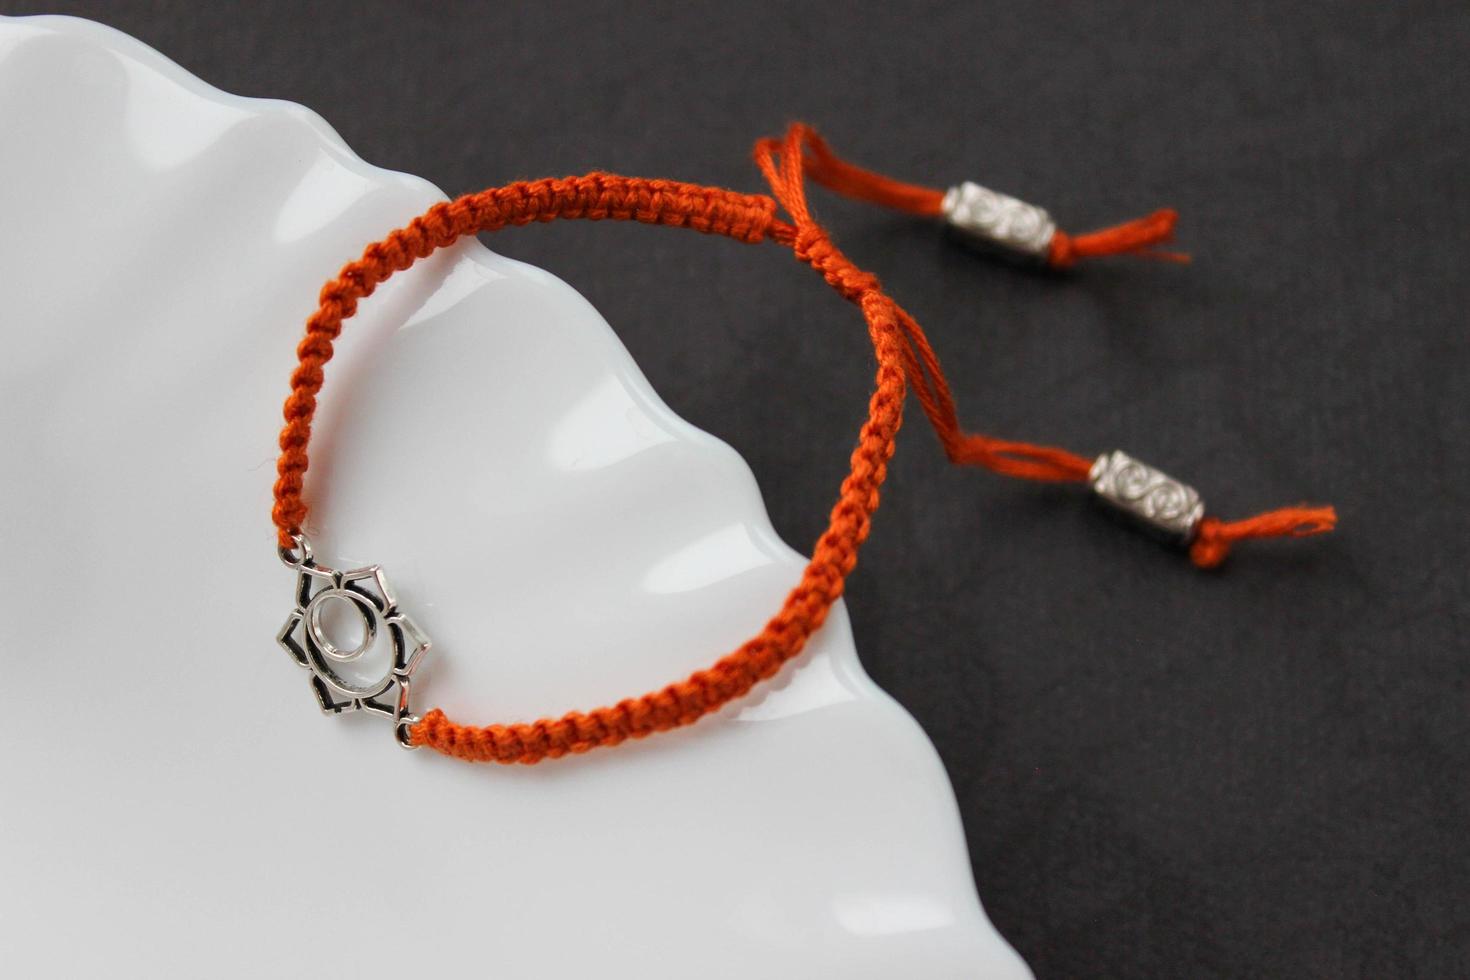 pulseira trançada artesanal laranja com chakra svadhishthana na borda de um prato branco como a neve foto